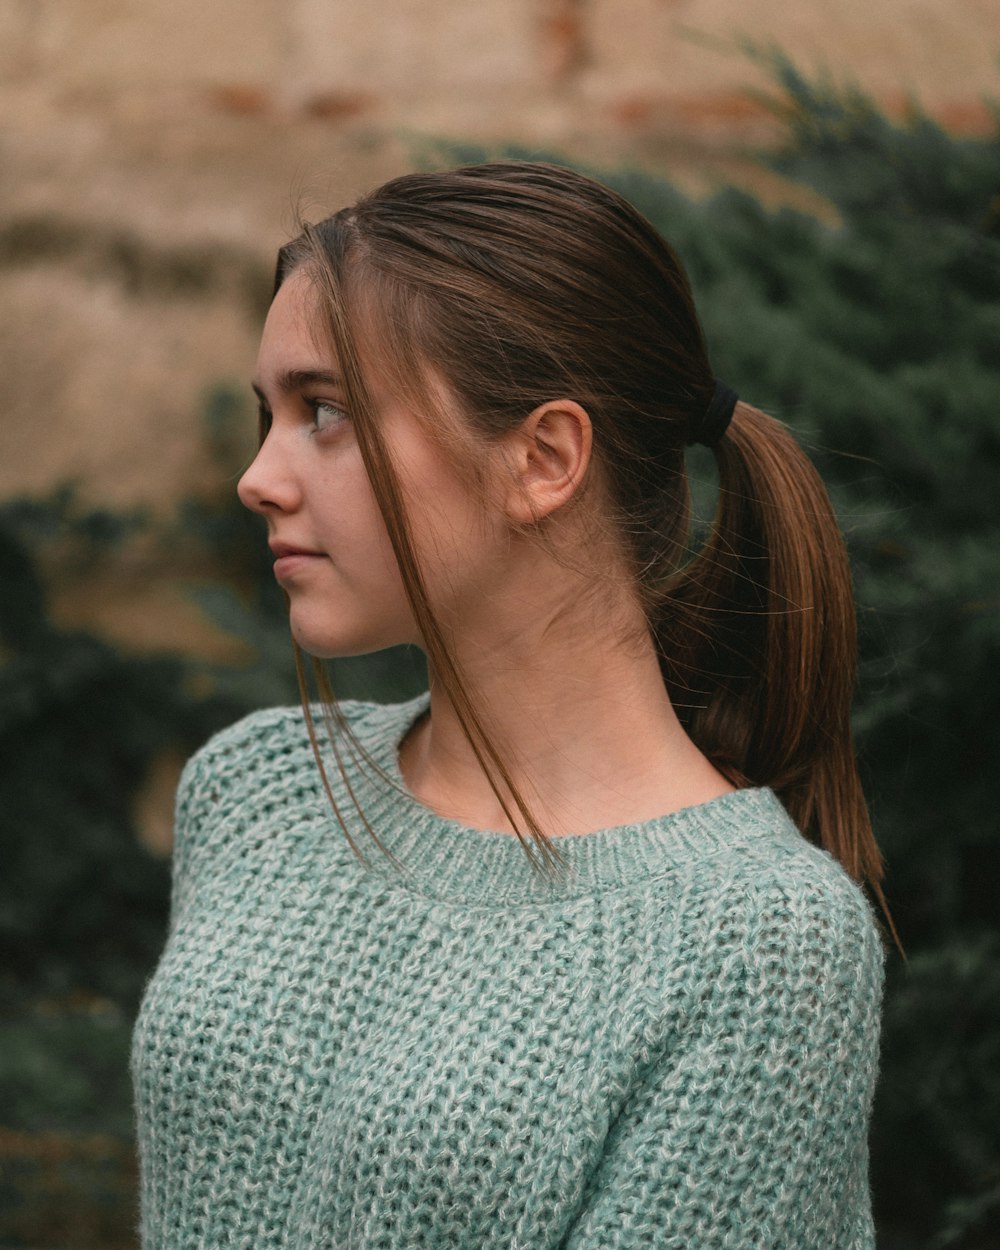 women's grey knit sweater during daytime